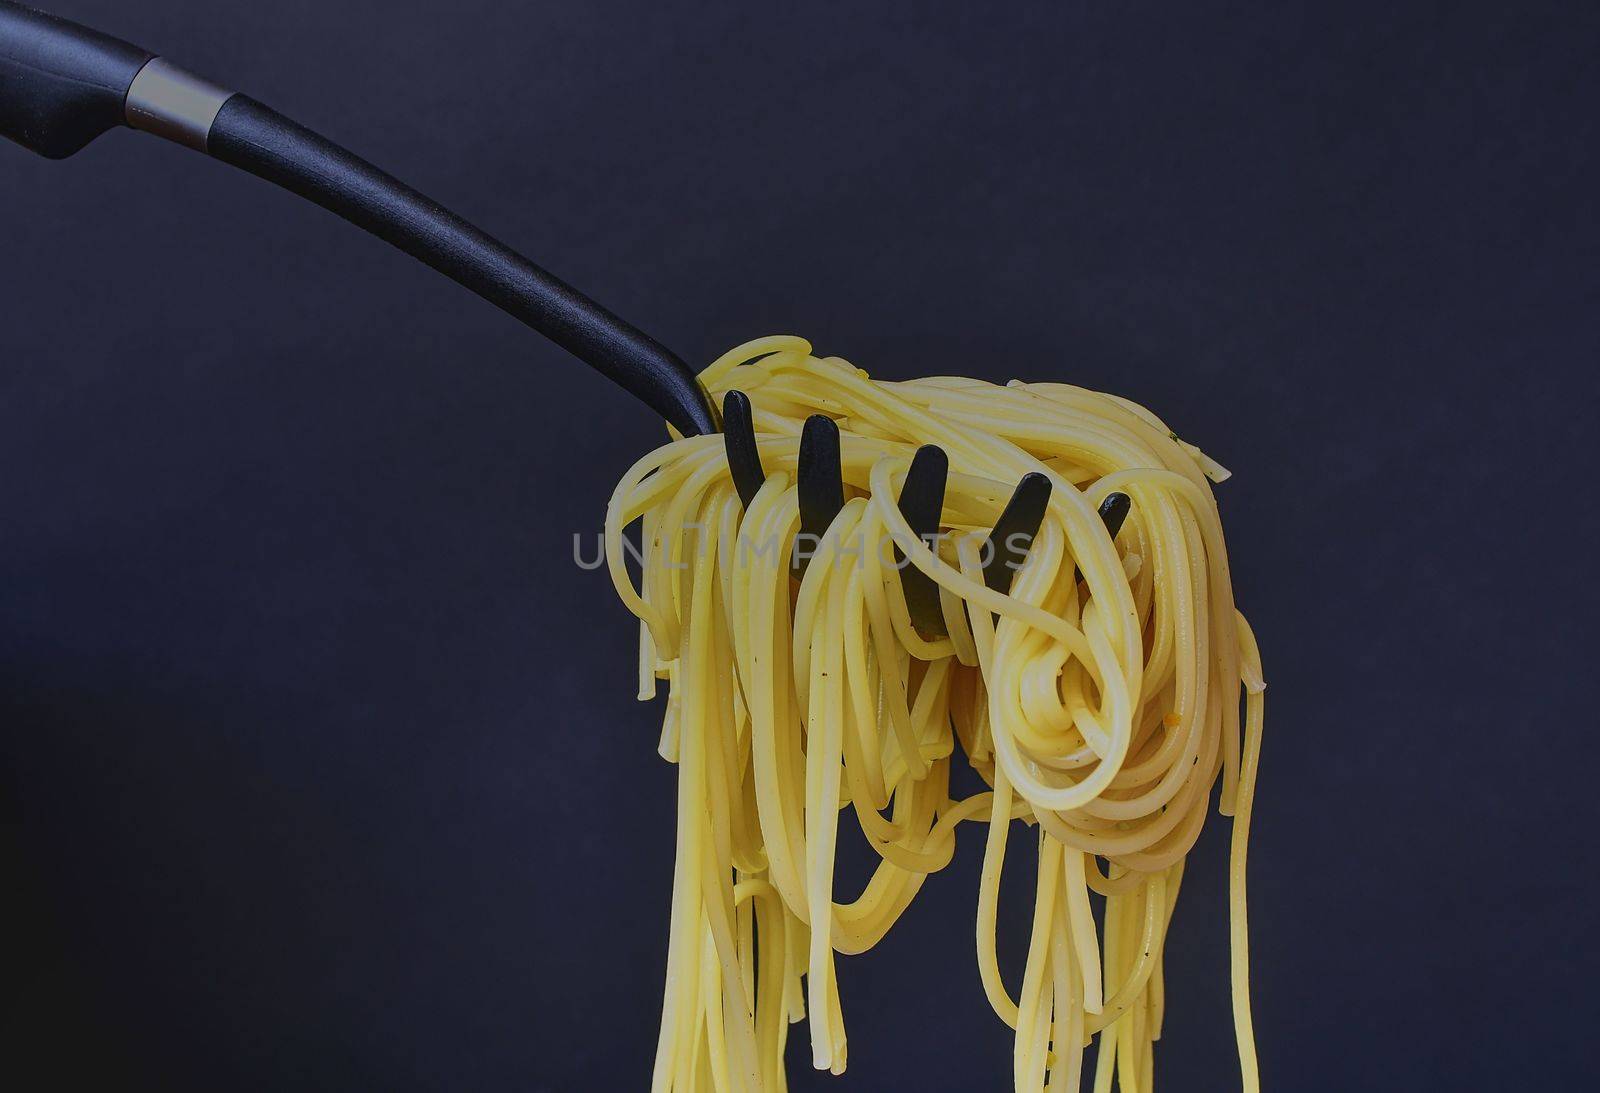 Cooked spaghetti on spaghetti spoon. Spaghetti on black background. Close-up. Dark food photo. Copy space.